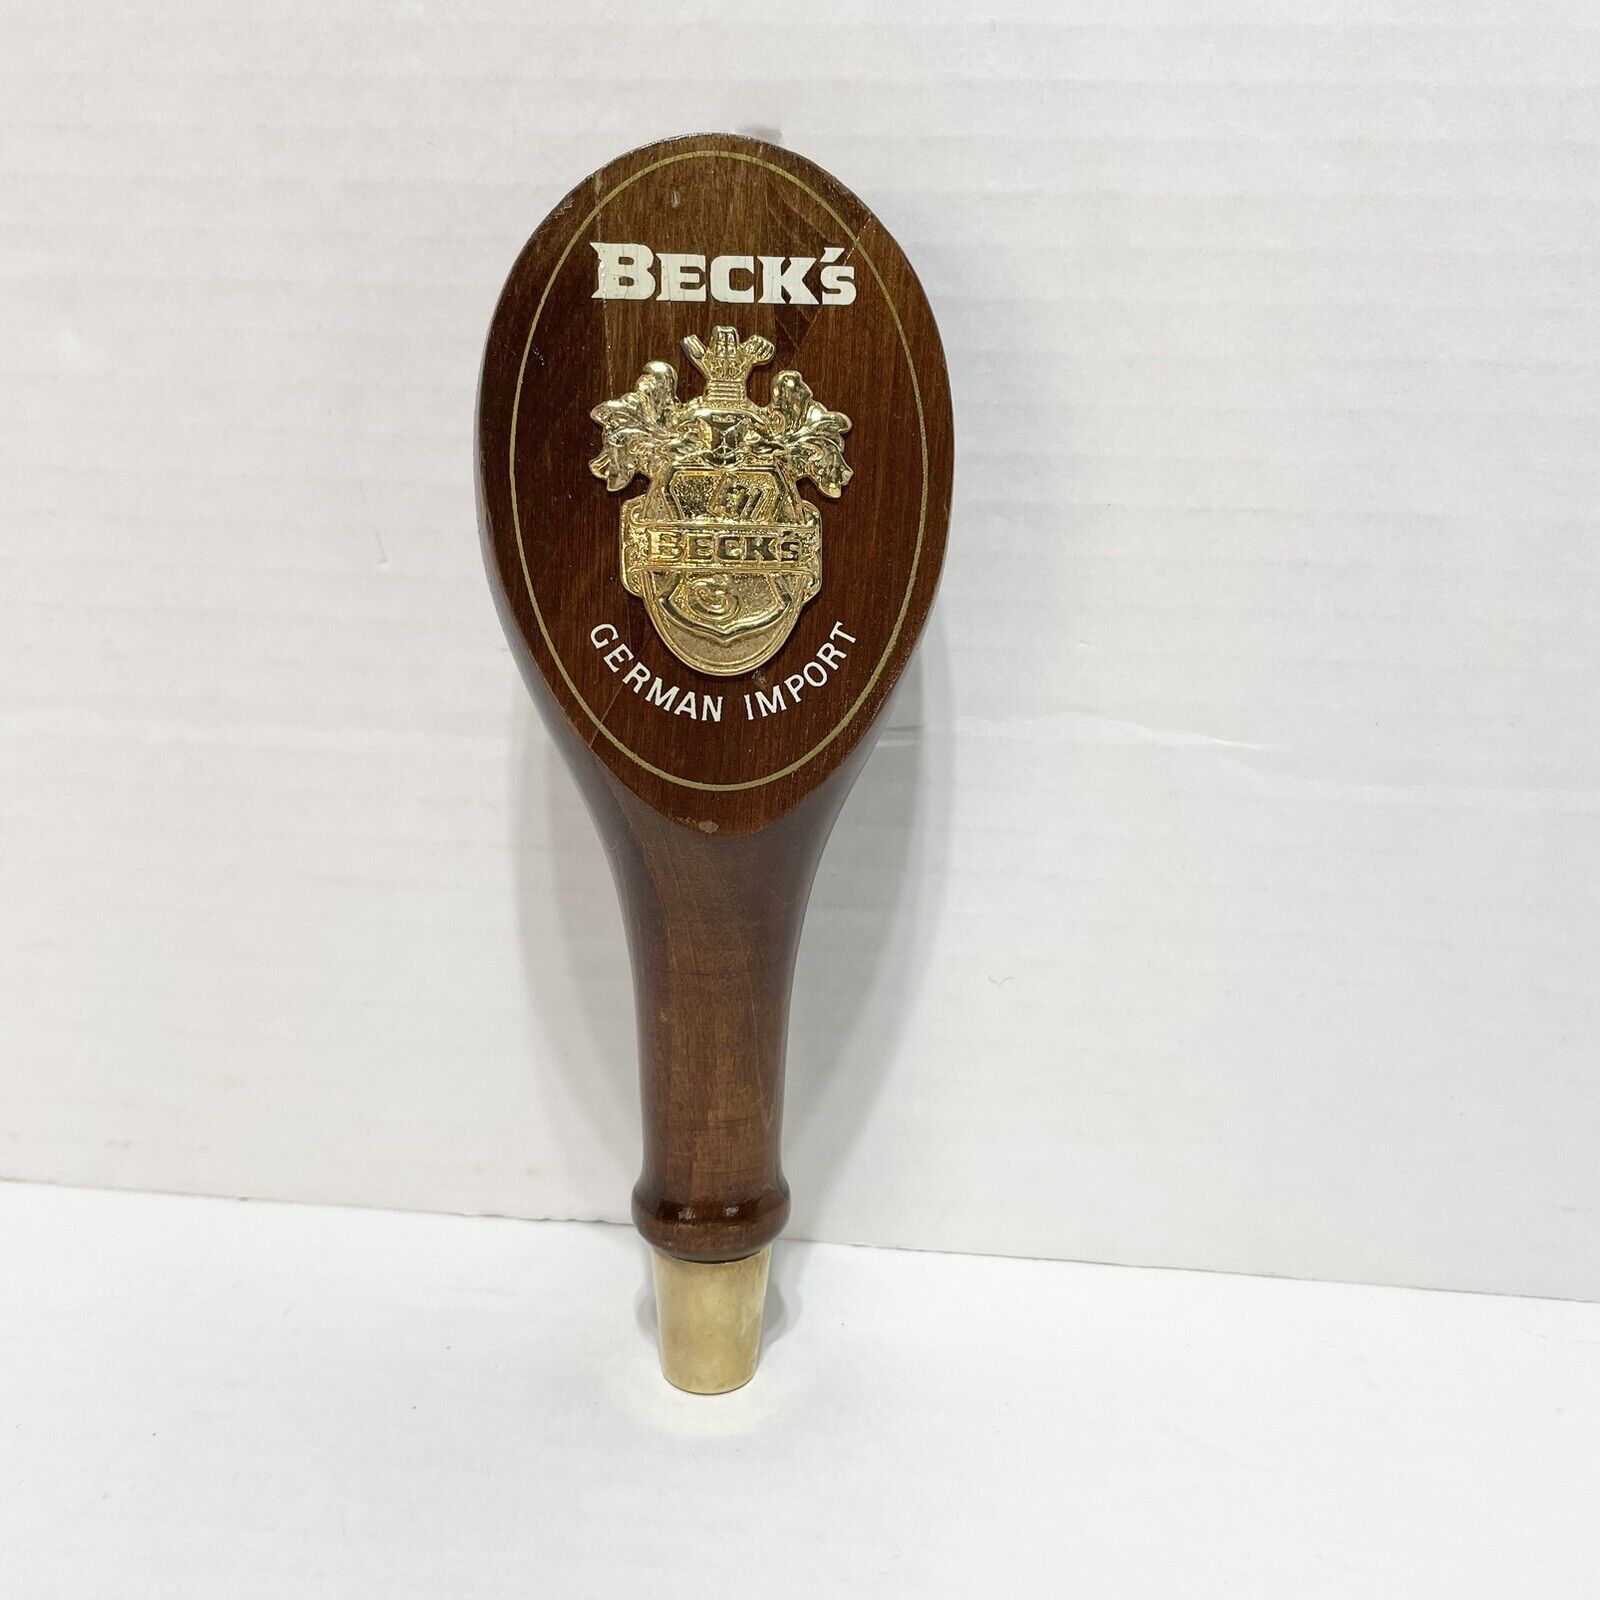 Vintage Beck’s Beer Handle Tap, Wood, Gold, German Import, 